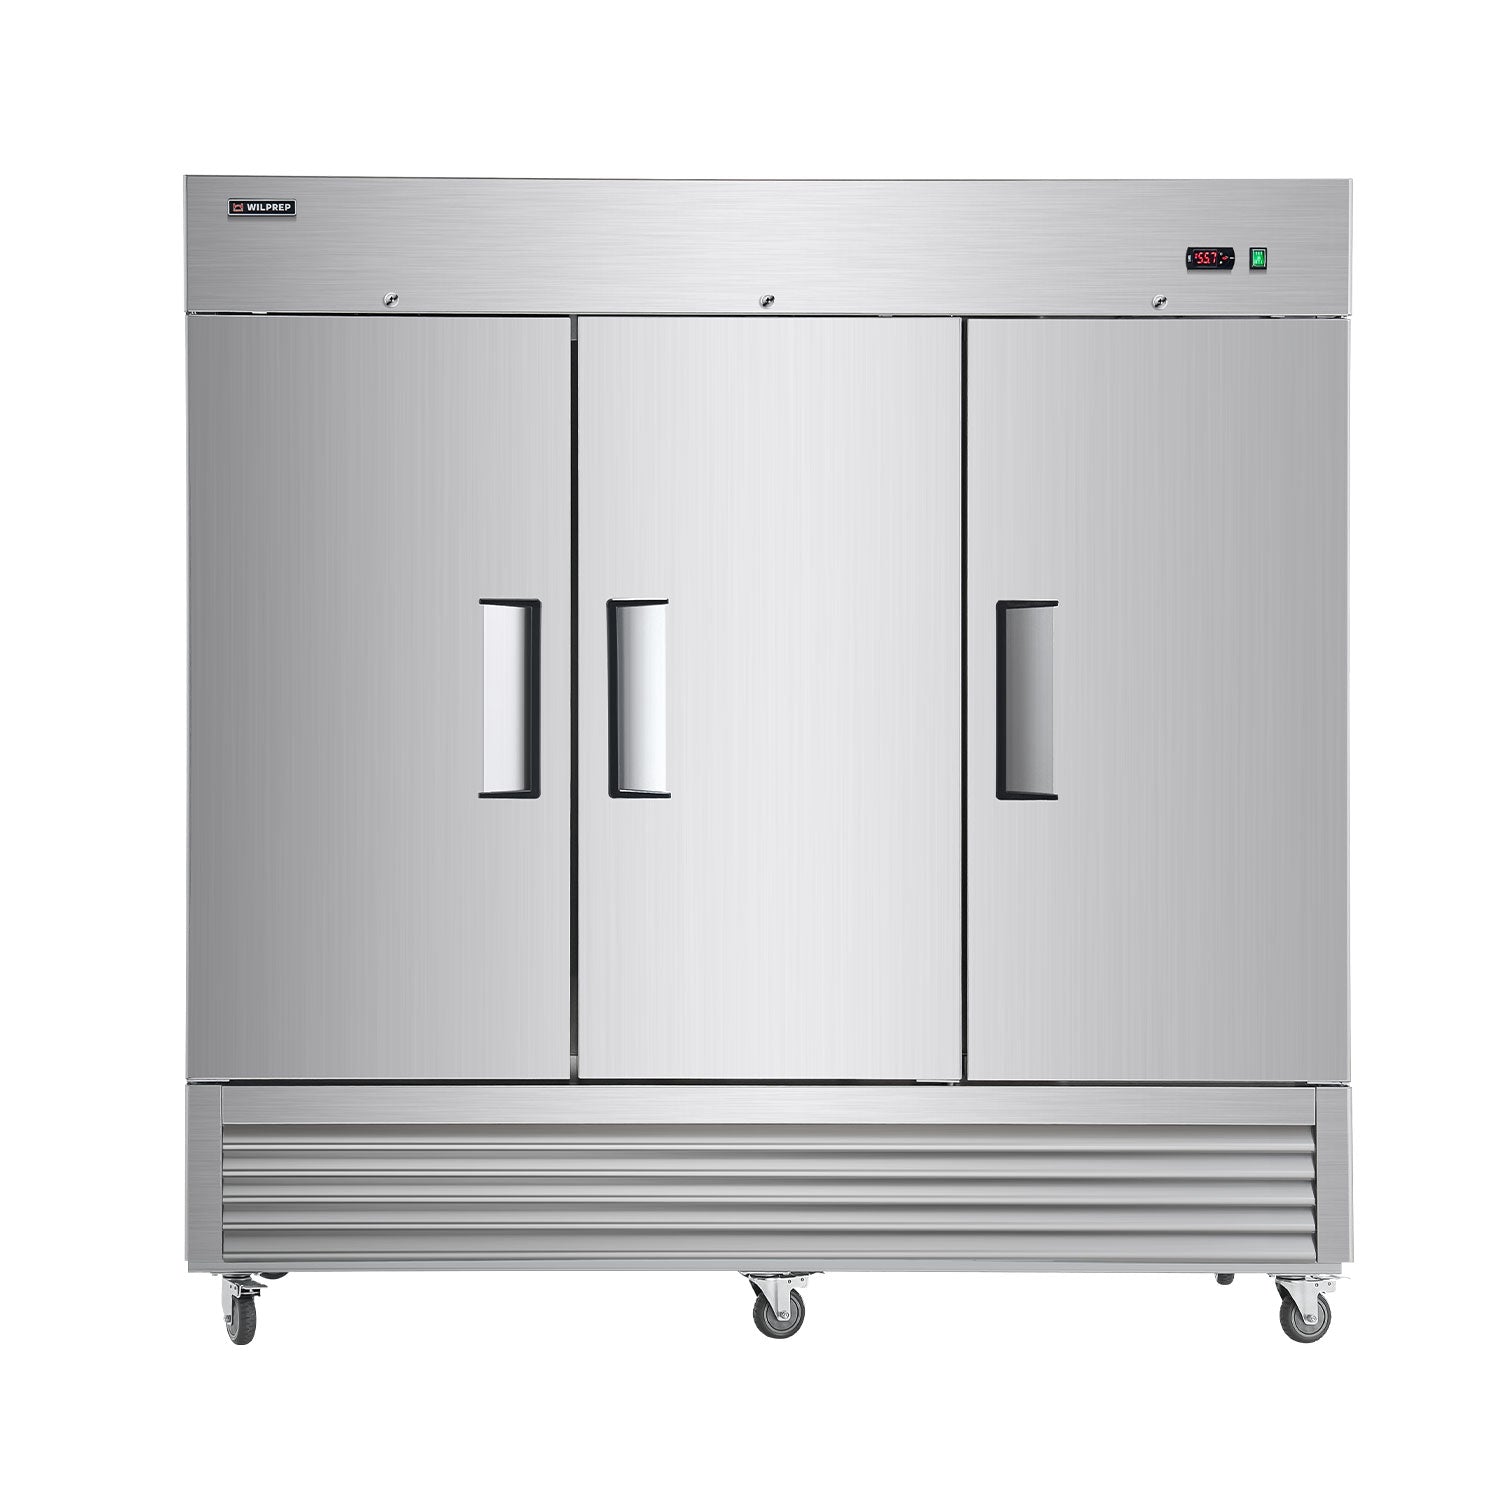 81'' Commercial Solid Door Reach-In Refrigerator 61 cu. ft. Capacity